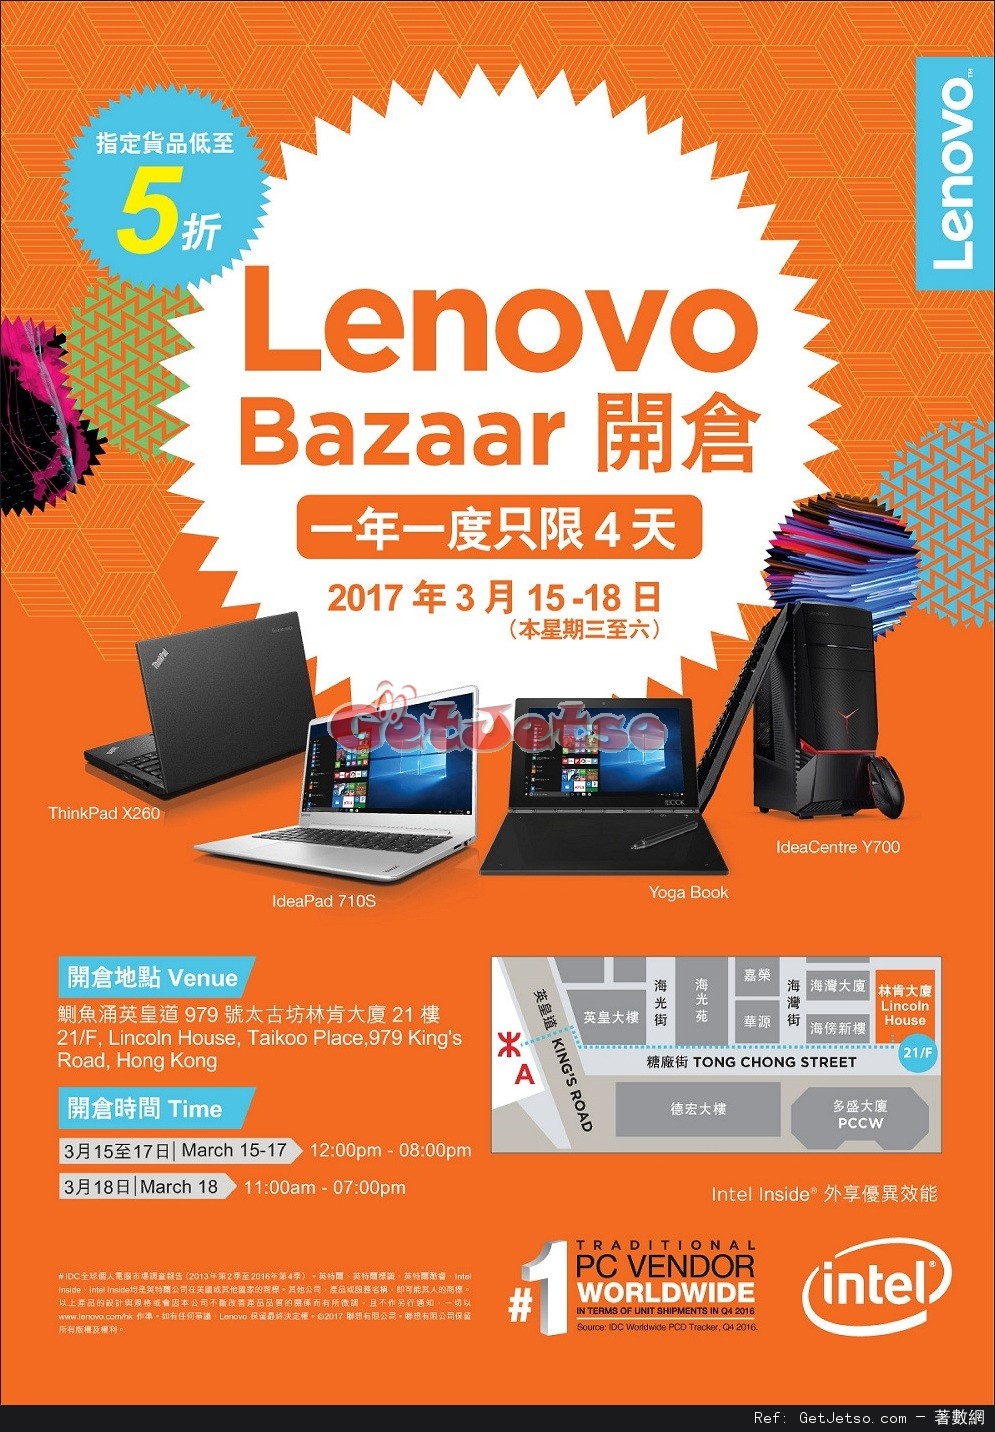 Lenovo 低至半價開倉優惠(17年3月15-18日)圖片1